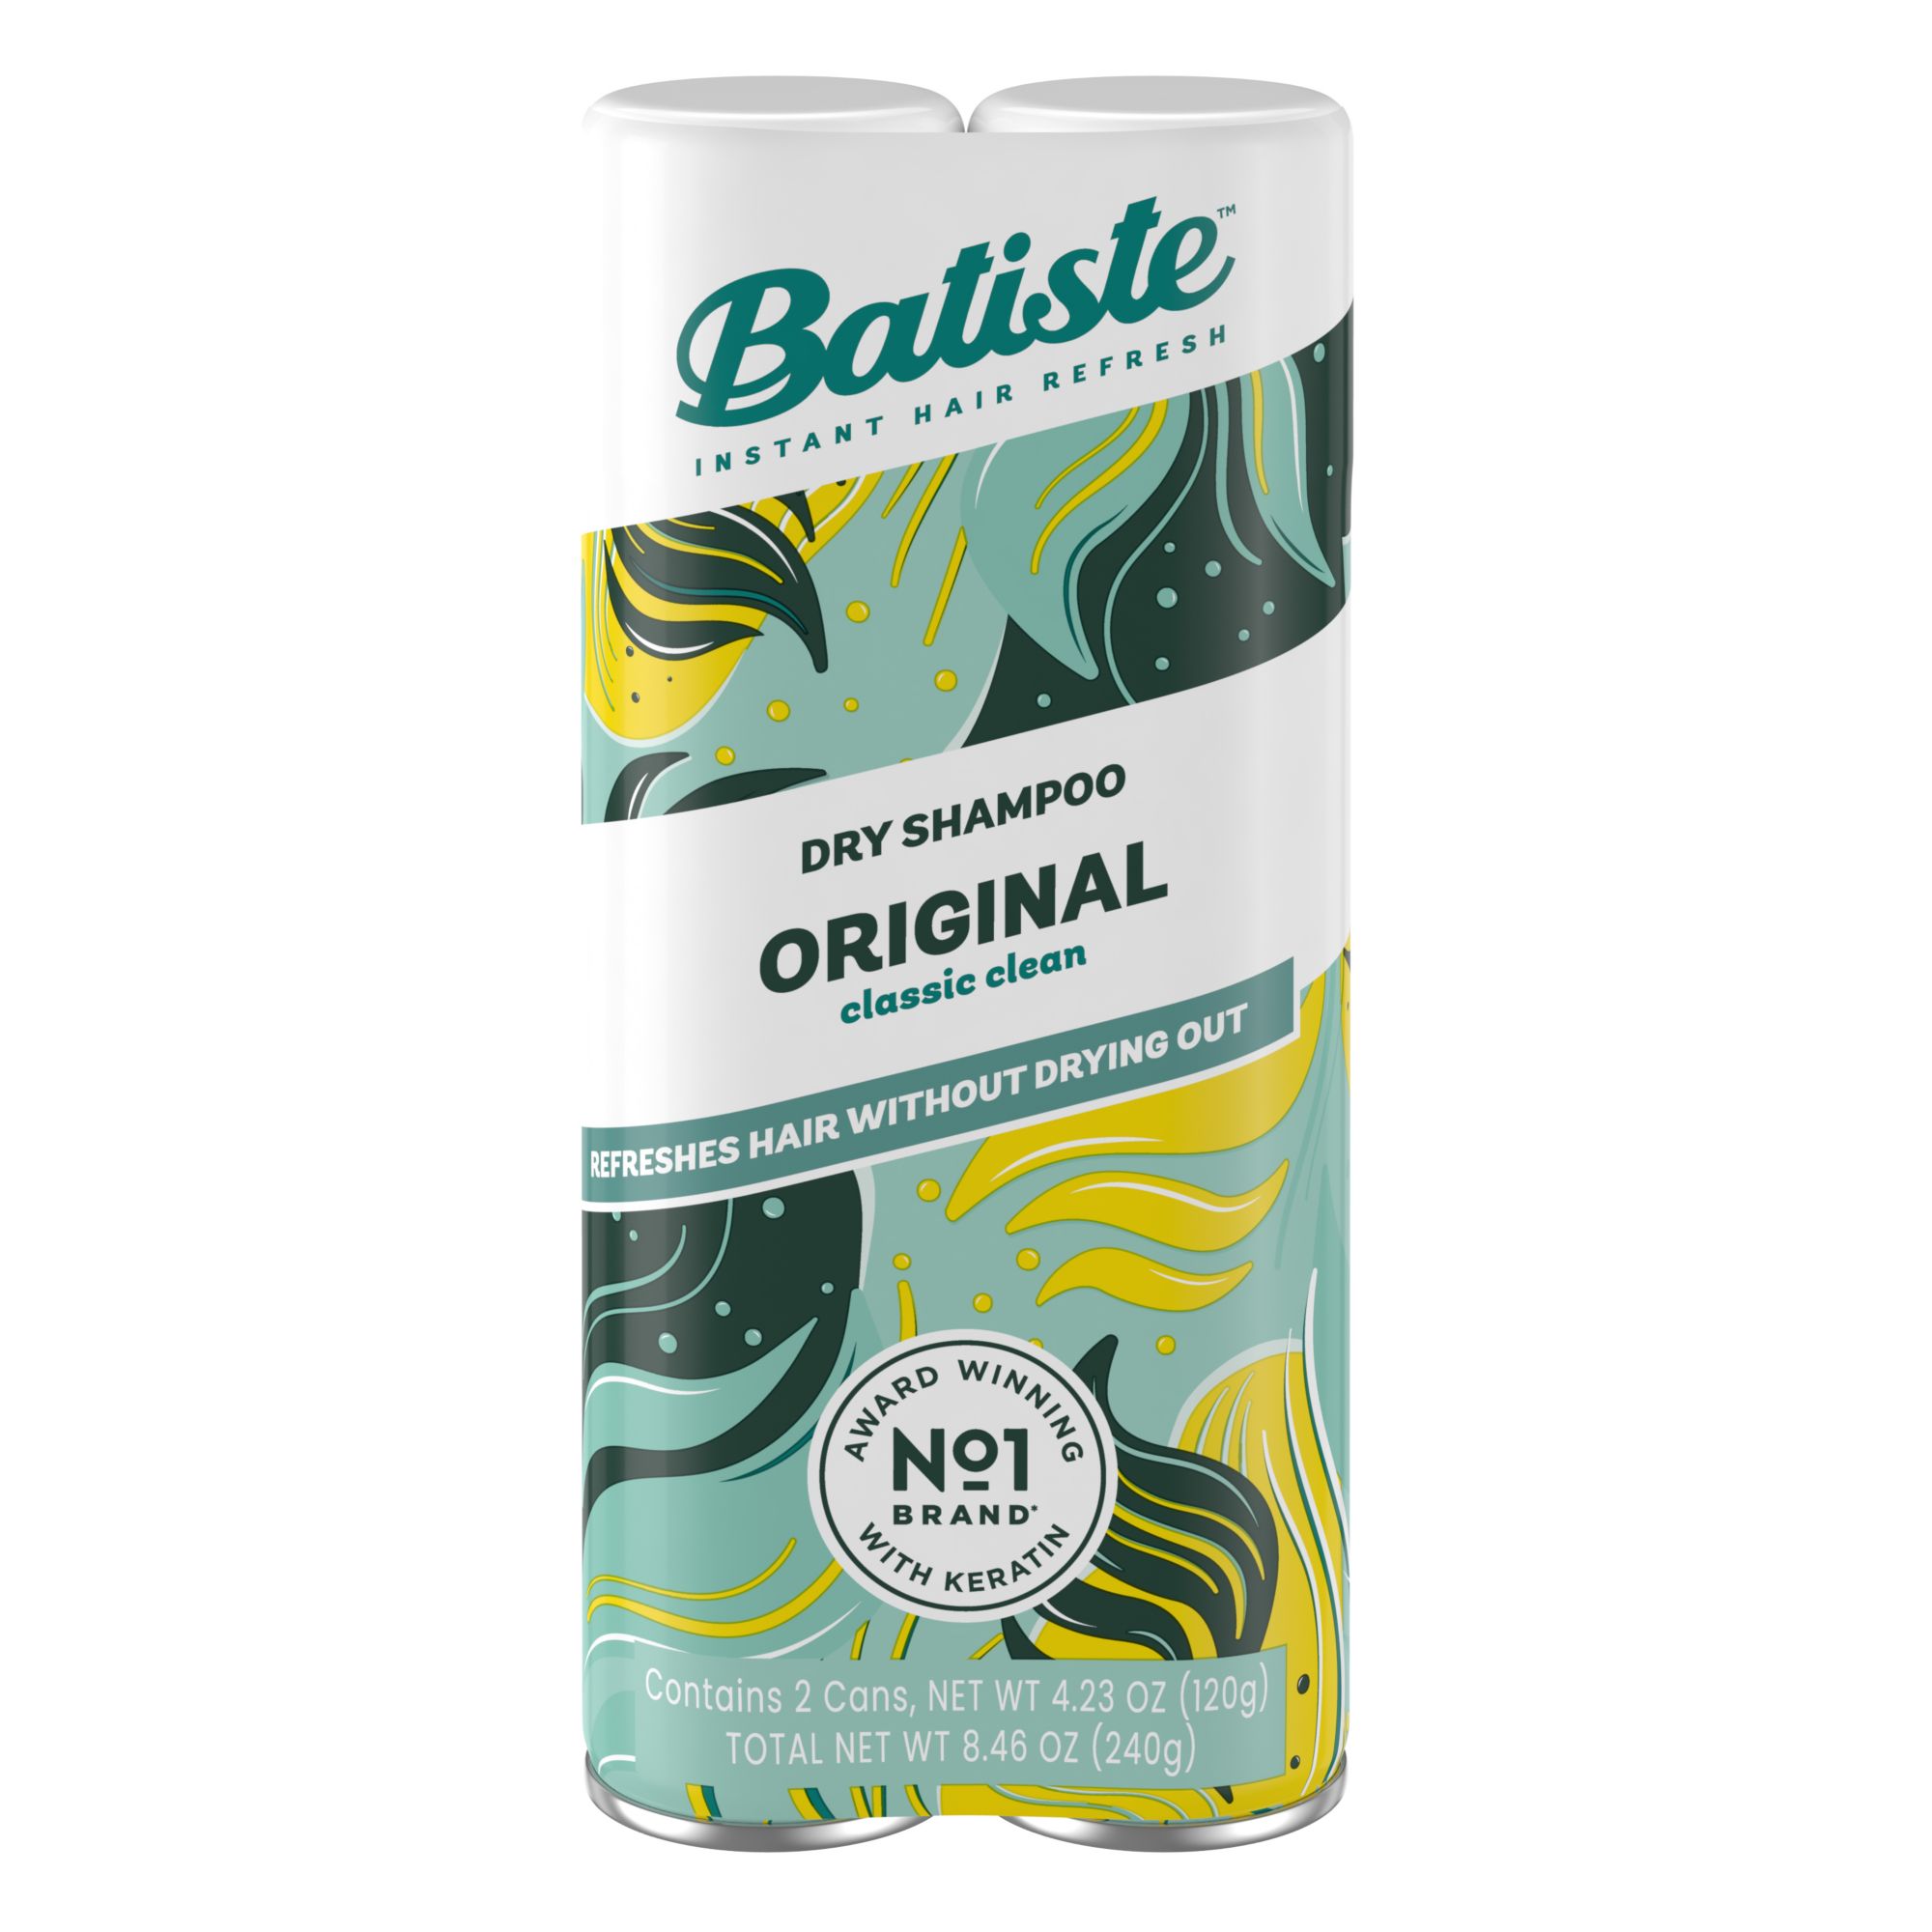 Delvis sollys snave Batiste Original Dry Shampoo, 2 pk./6.73 oz. - BJs Wholesale Club